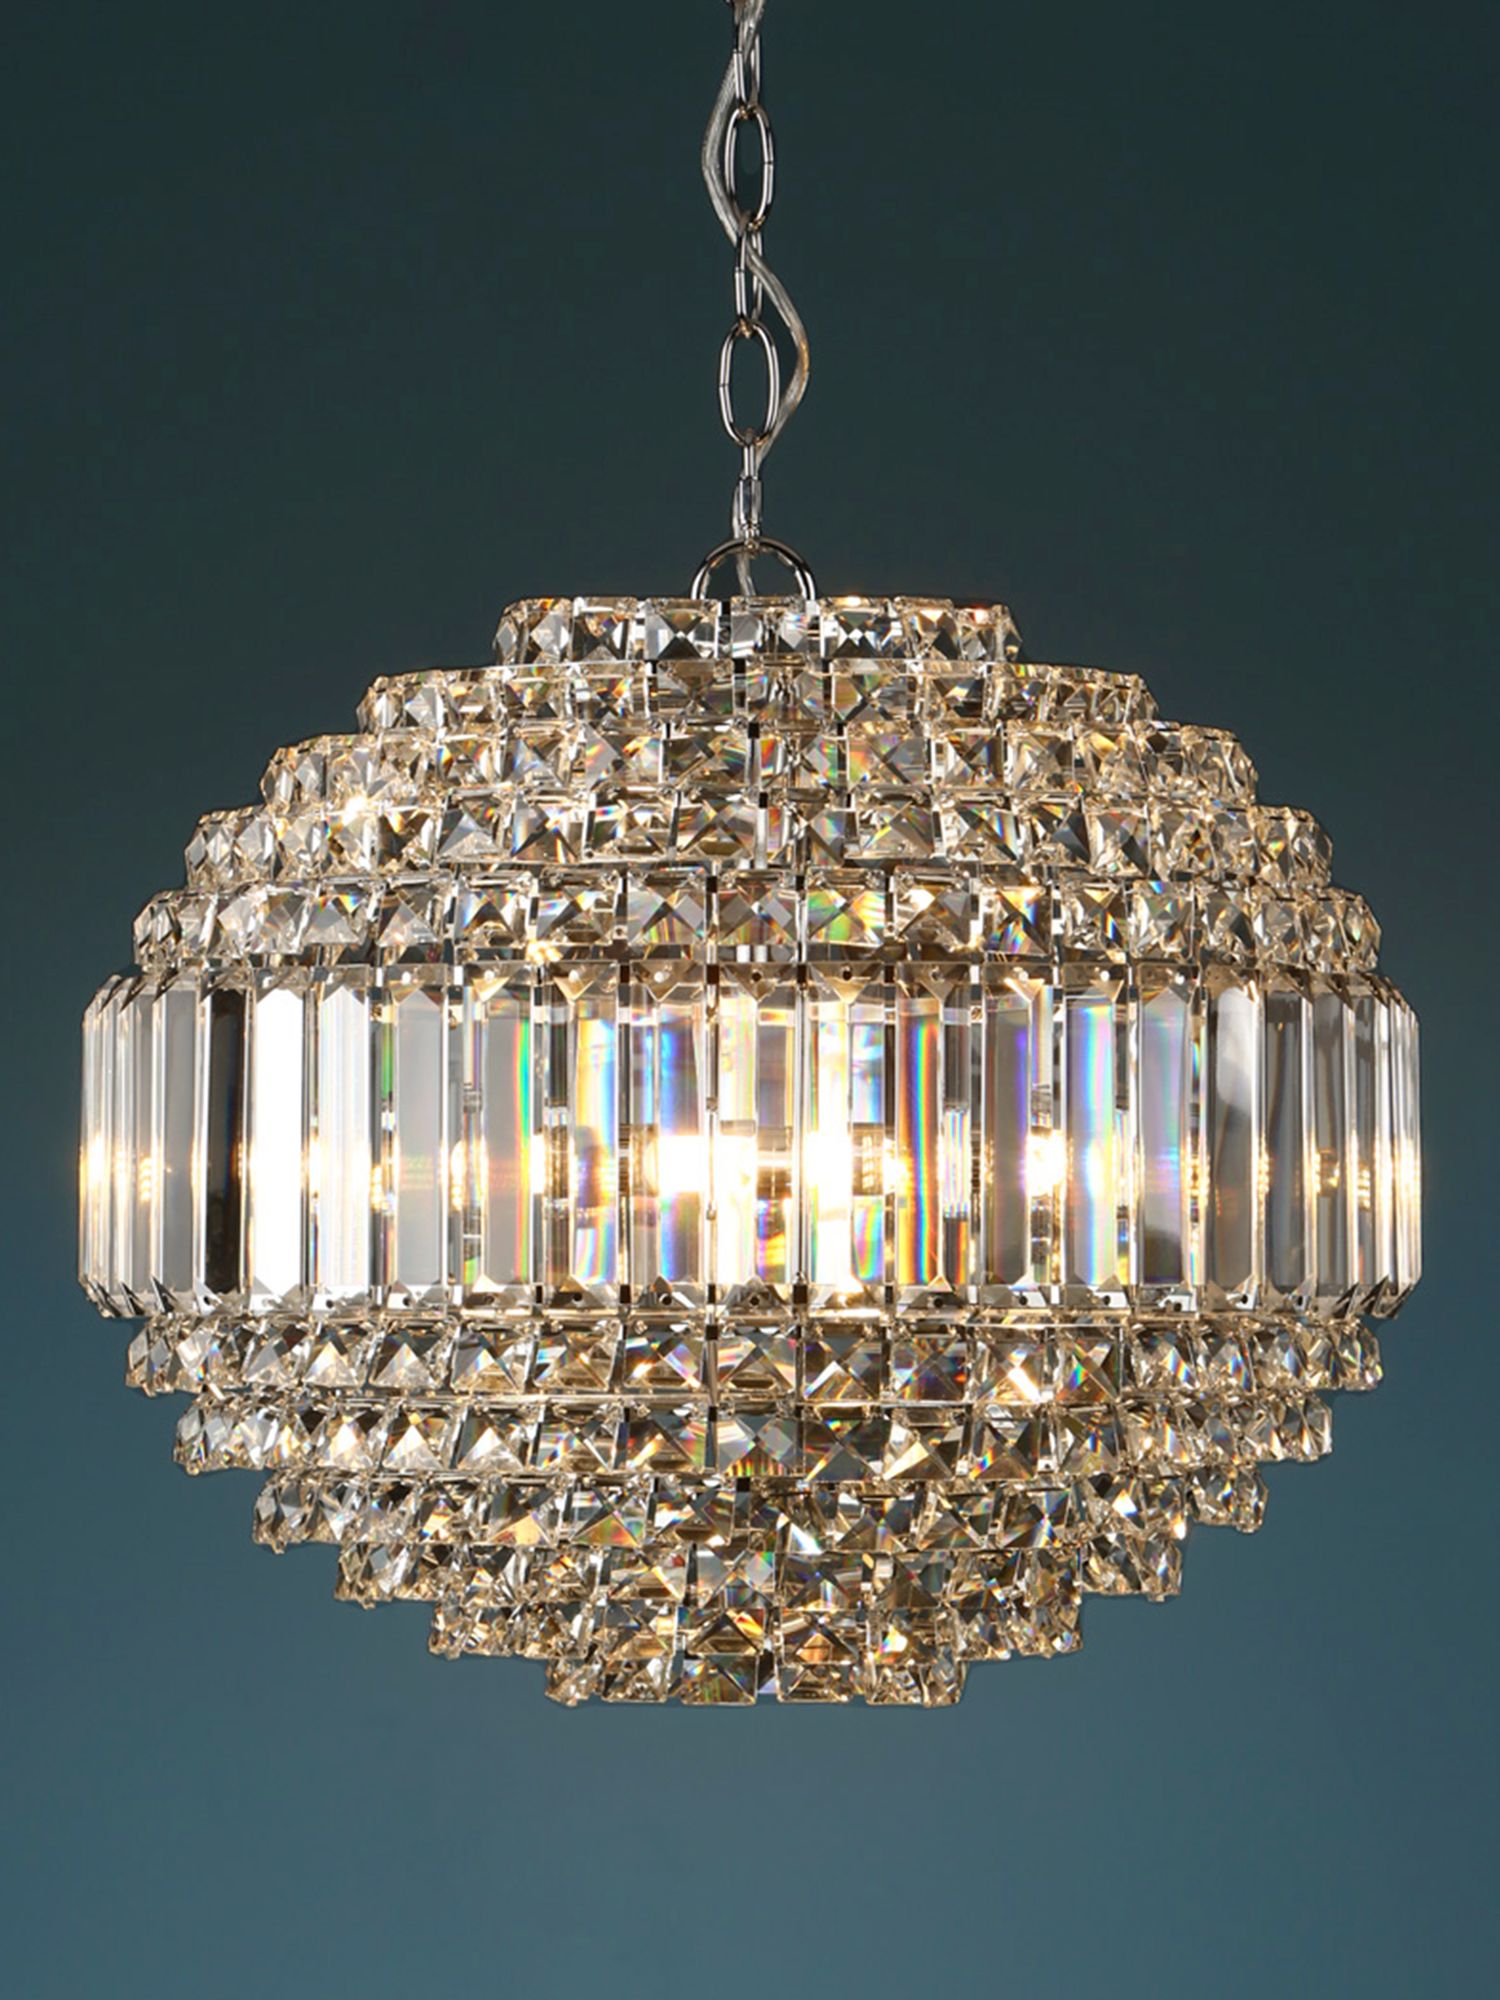 Photo of Laura ashley vienna crystal glass globe ceiling light clear/polished chrome